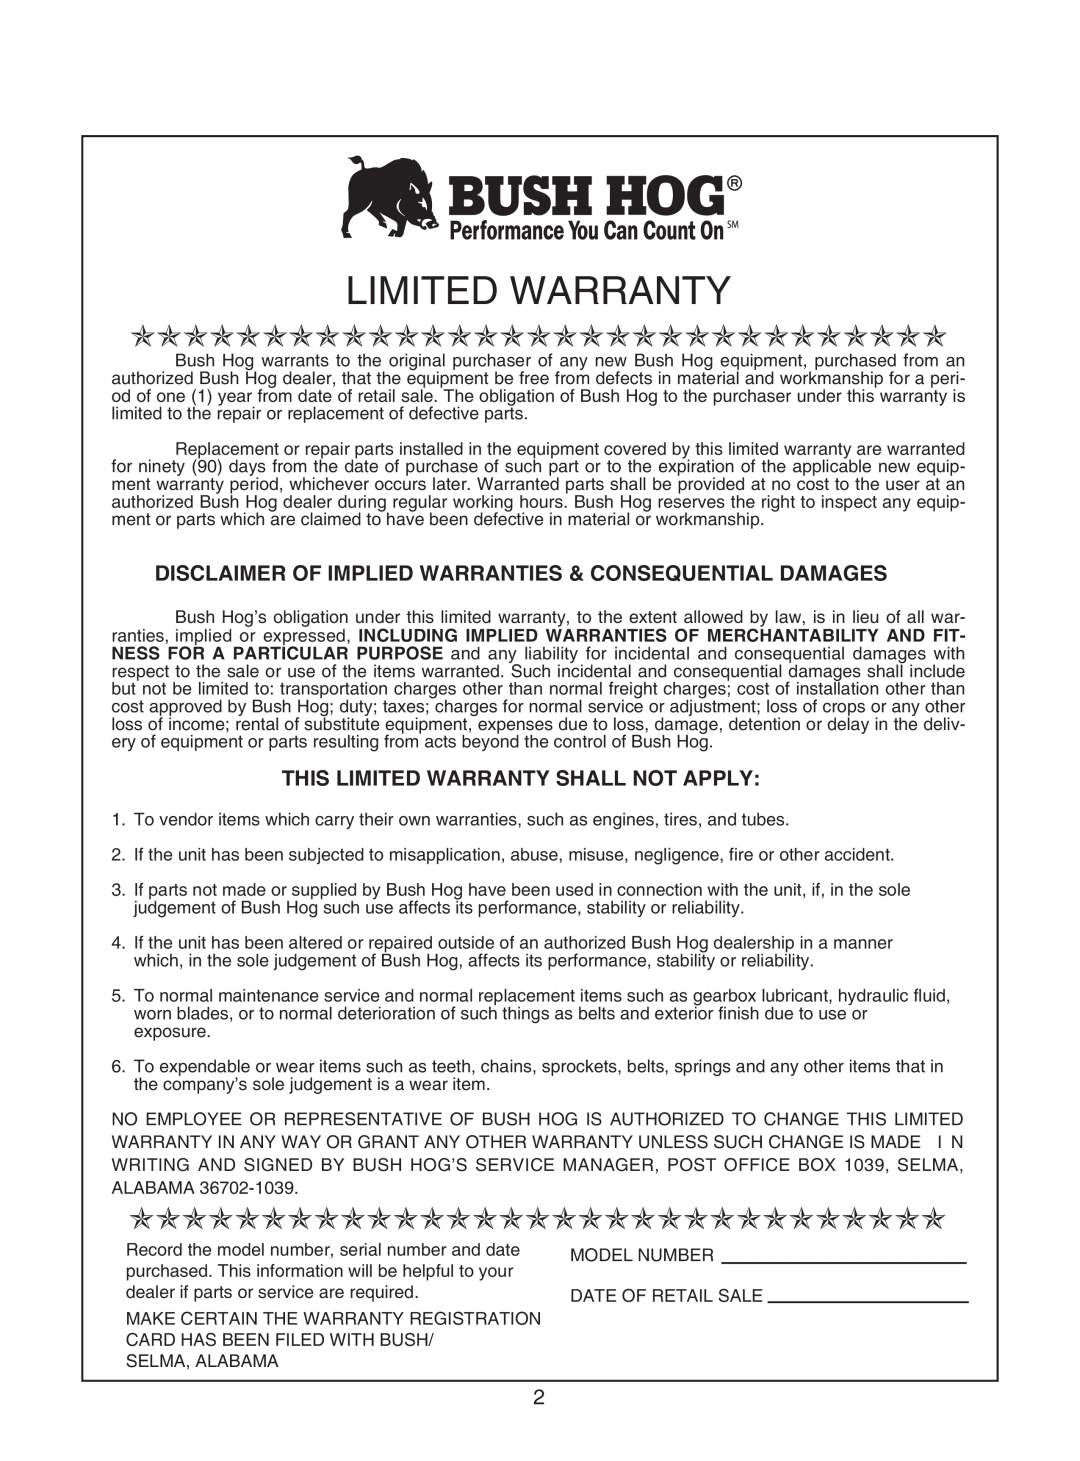 Bush Hog GC-250 manual This Limited Warranty Shall Not Apply, Limitedwarranty, Ooooooooooooooooooooooooooooooo 